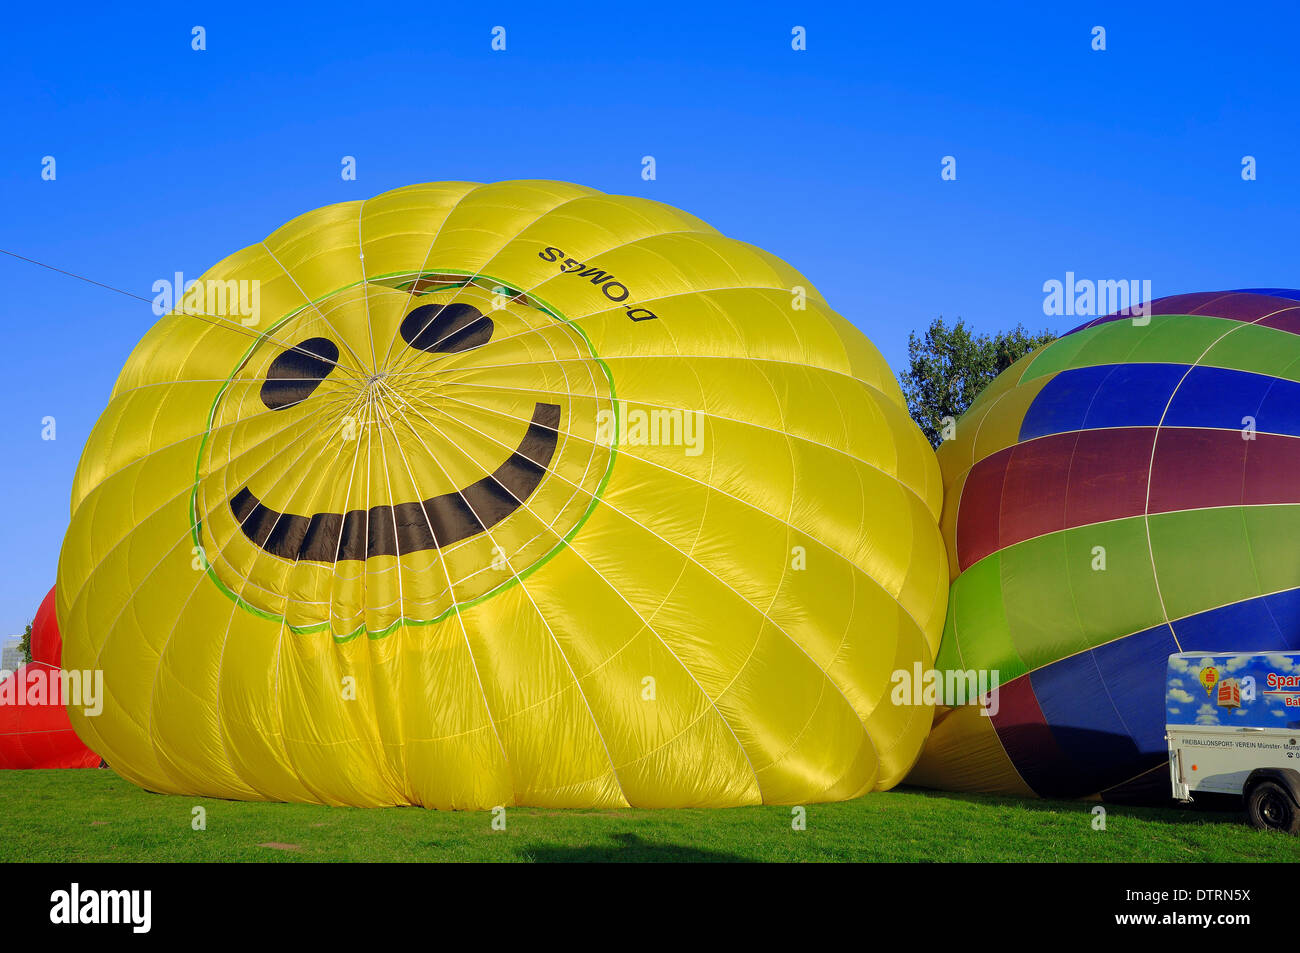 Hot air balloons, Munster, North Rhine-Westphalia, Germany Stock Photo